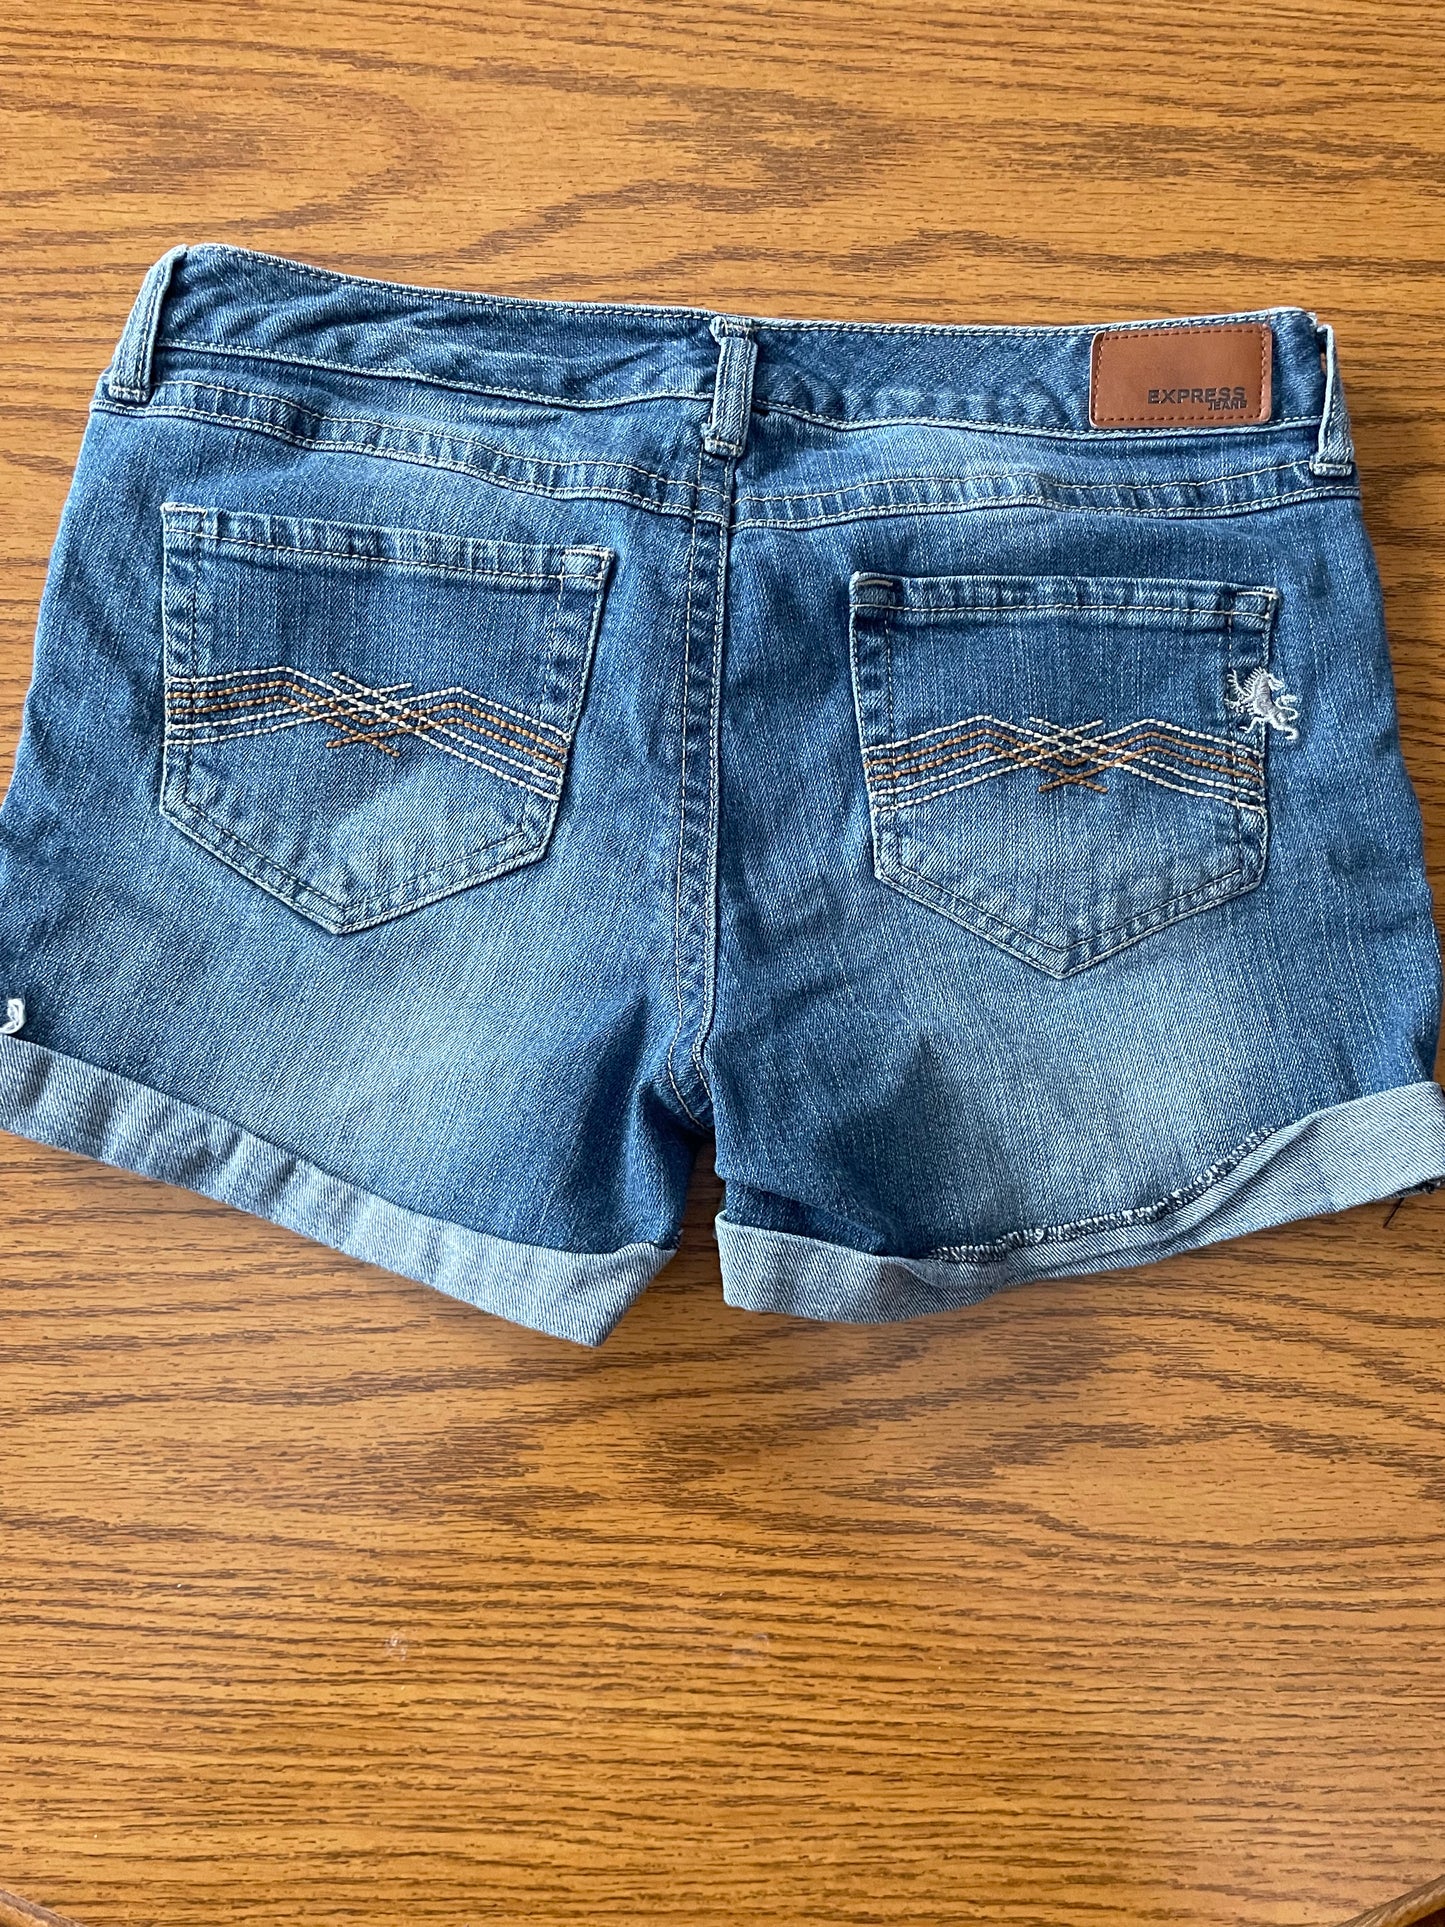 Women’s express jean shorts size 6